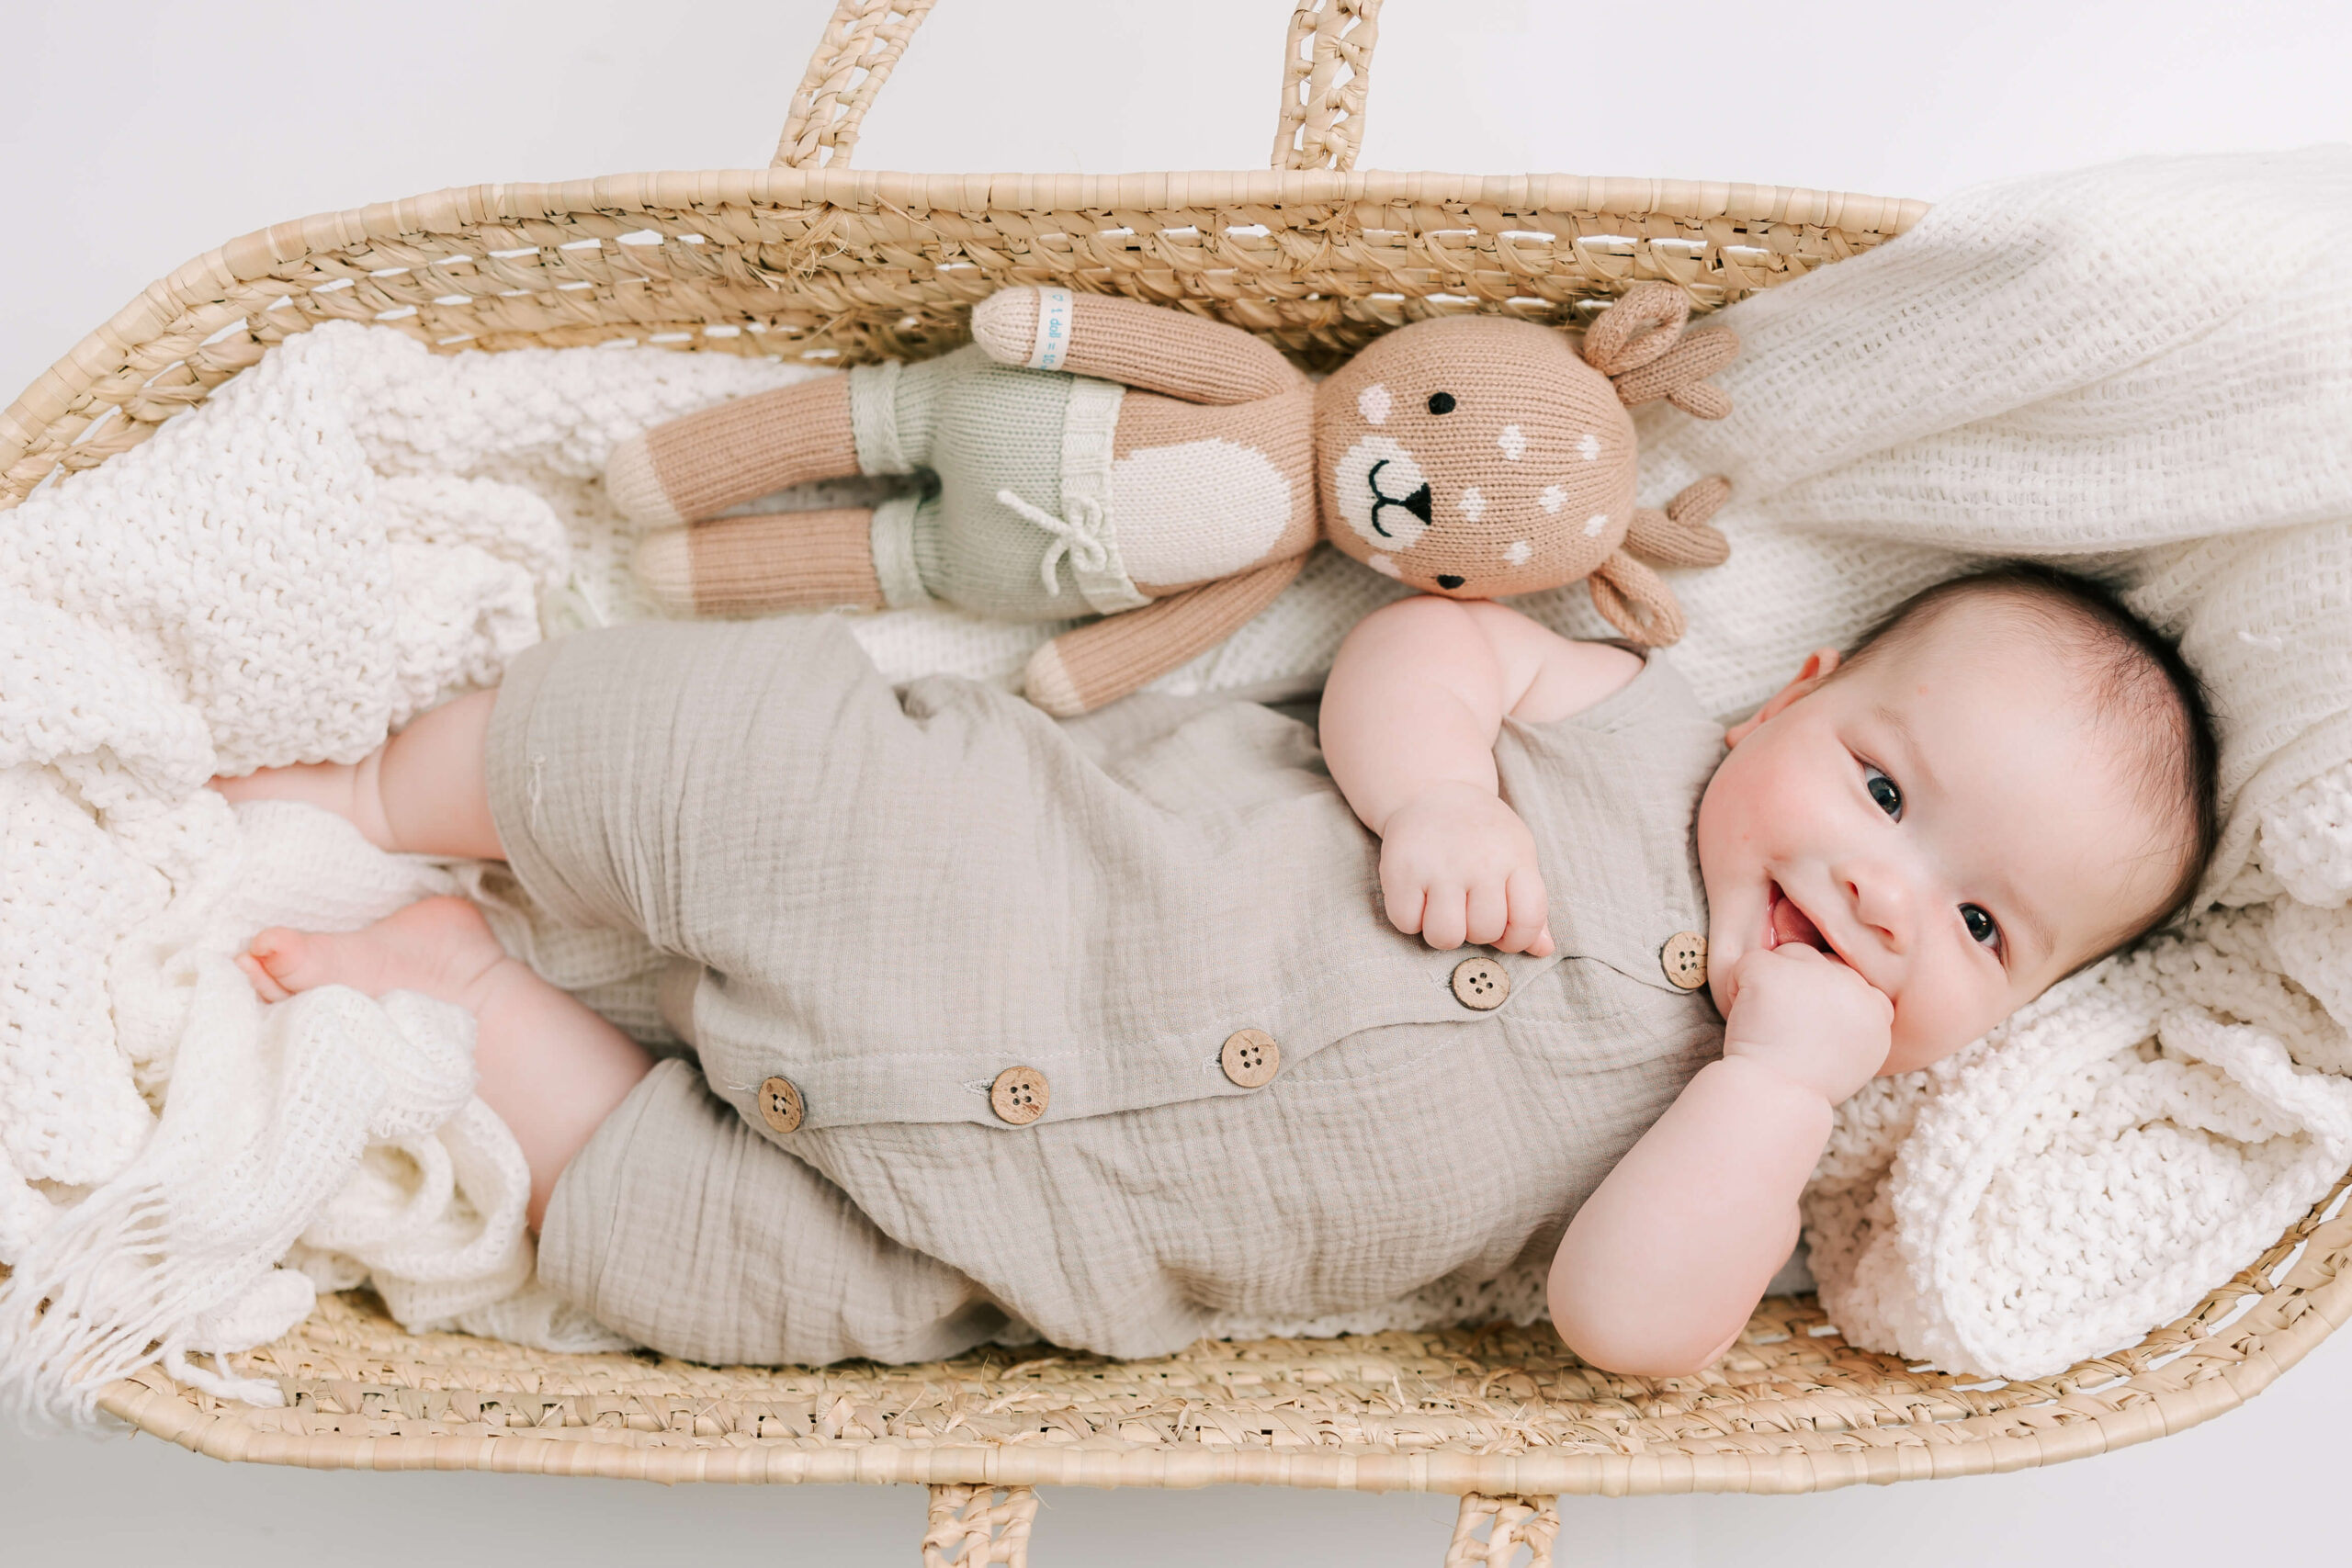 6 month old baby boy enjoying laying in his basket during his photoshoot.